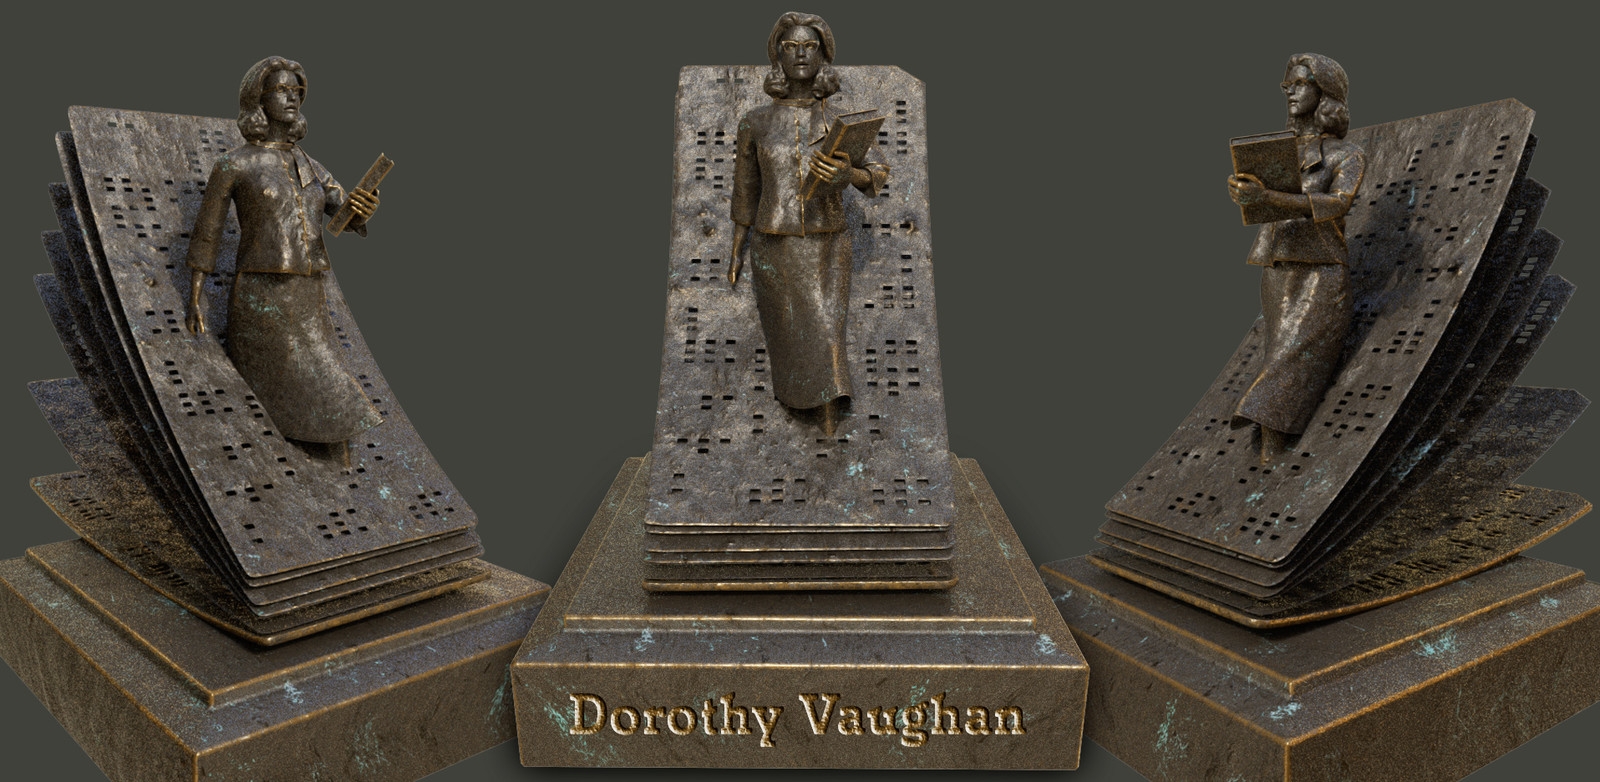 Dorothy Vaughan, "human computer", engineer &amp; diversity advocate.